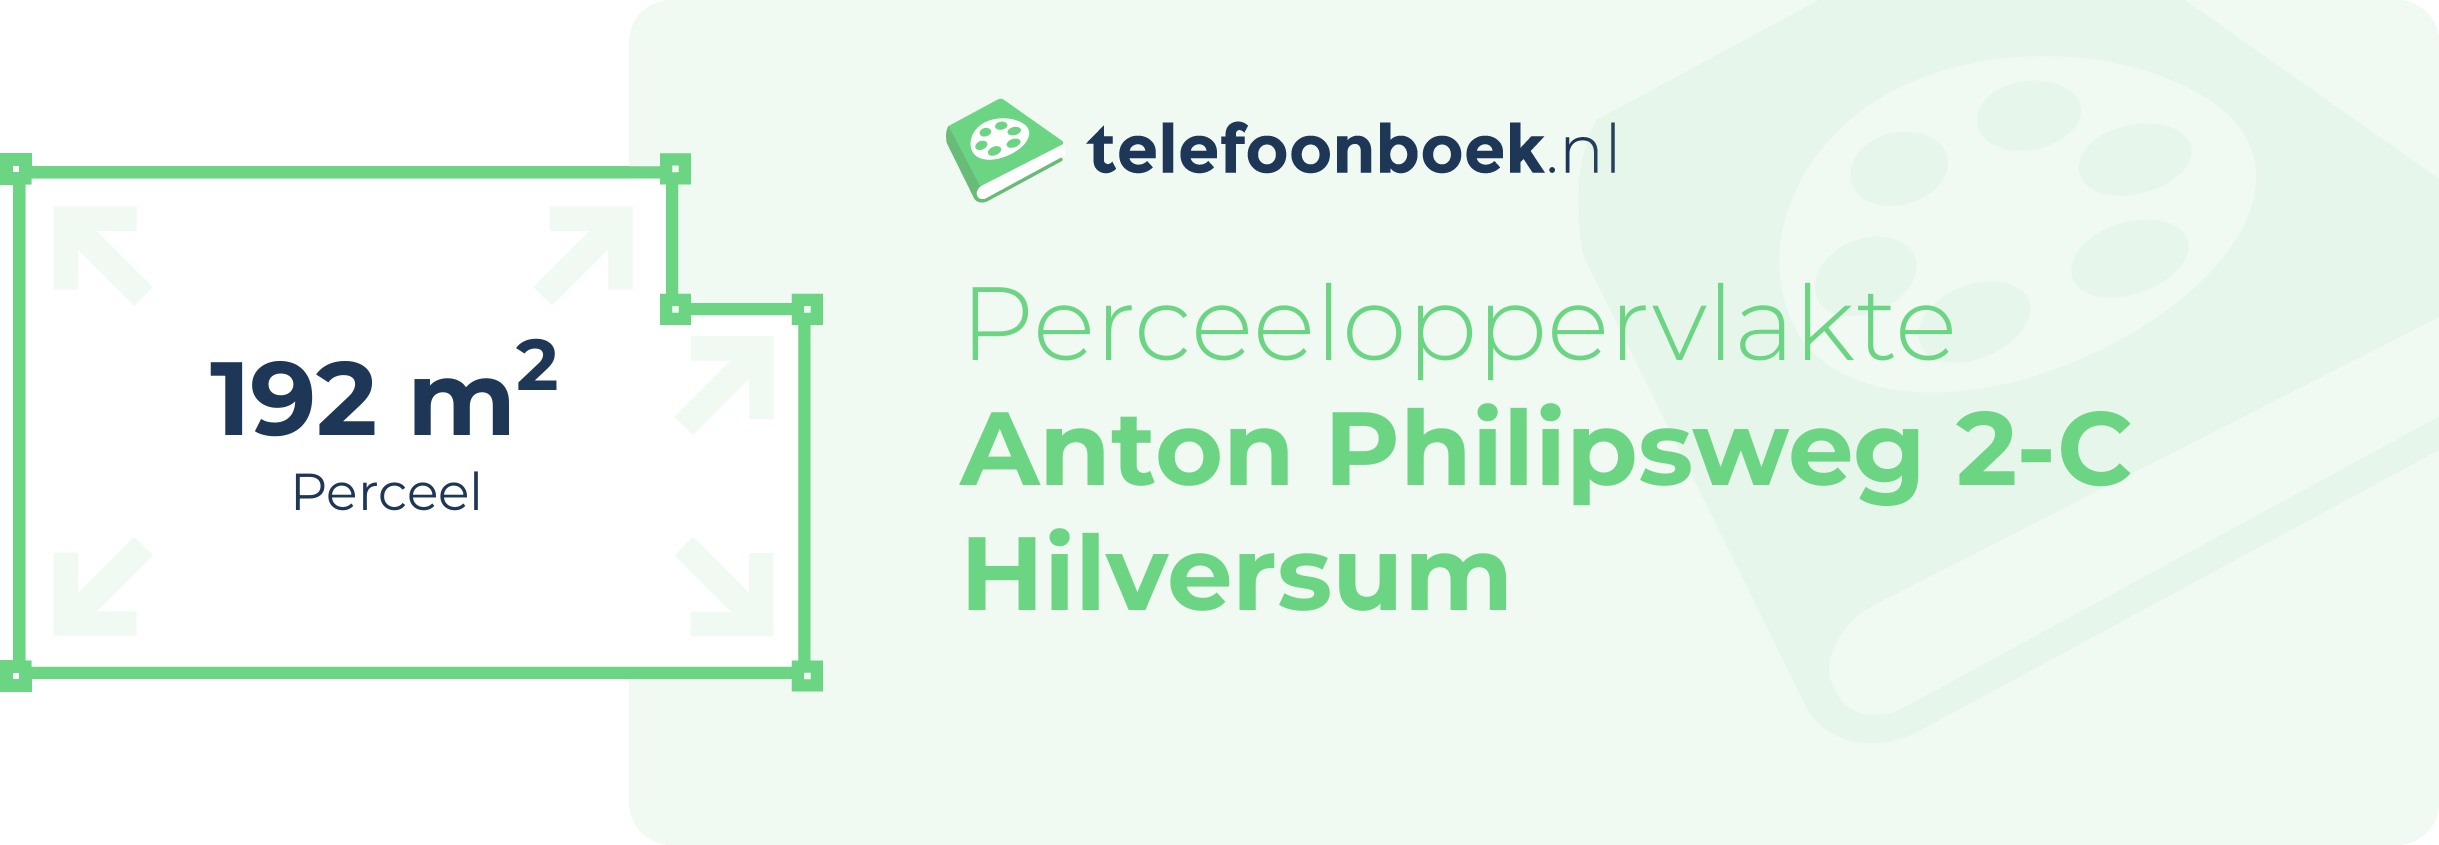 Perceeloppervlakte Anton Philipsweg 2-C Hilversum